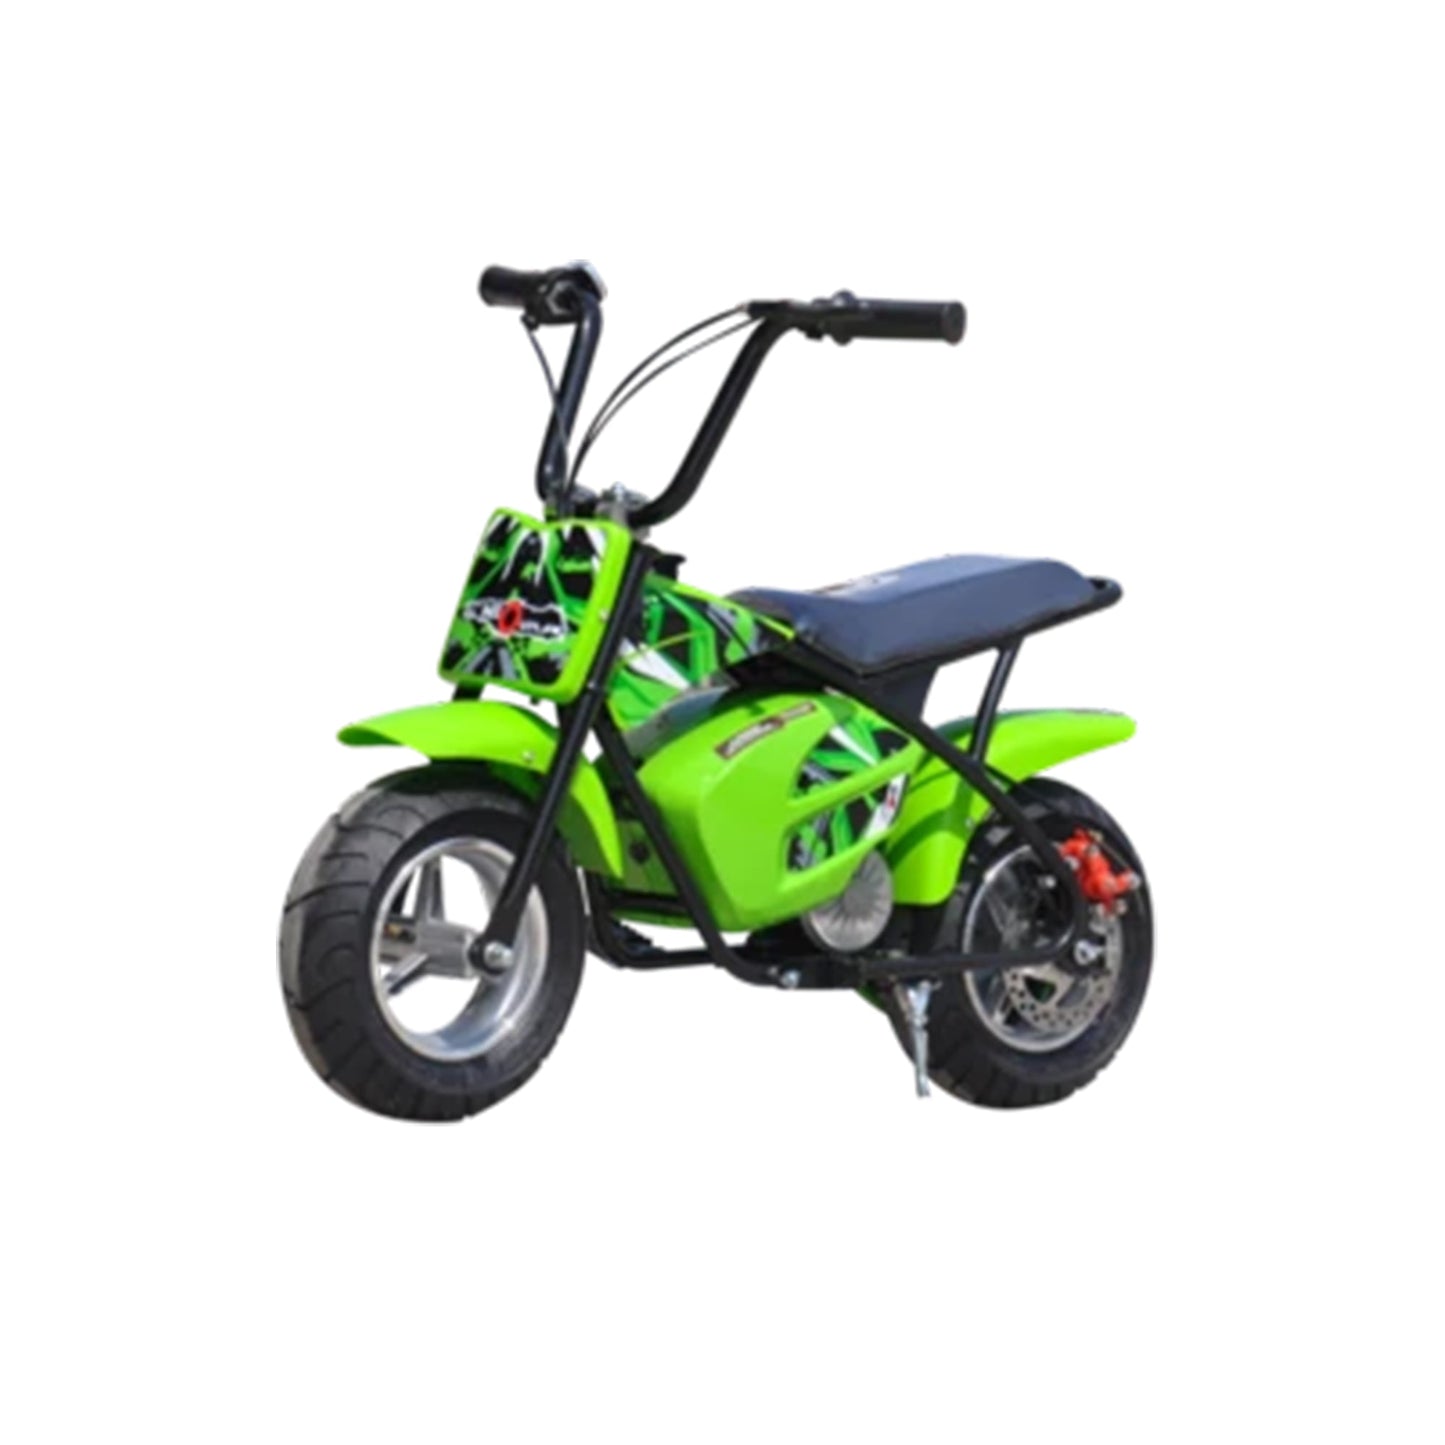 "Small green electric kids dirt bike, Mini Dirtbike Scrambler Ride On with 250 Watt, 12 Volt brushless motor on a white background."